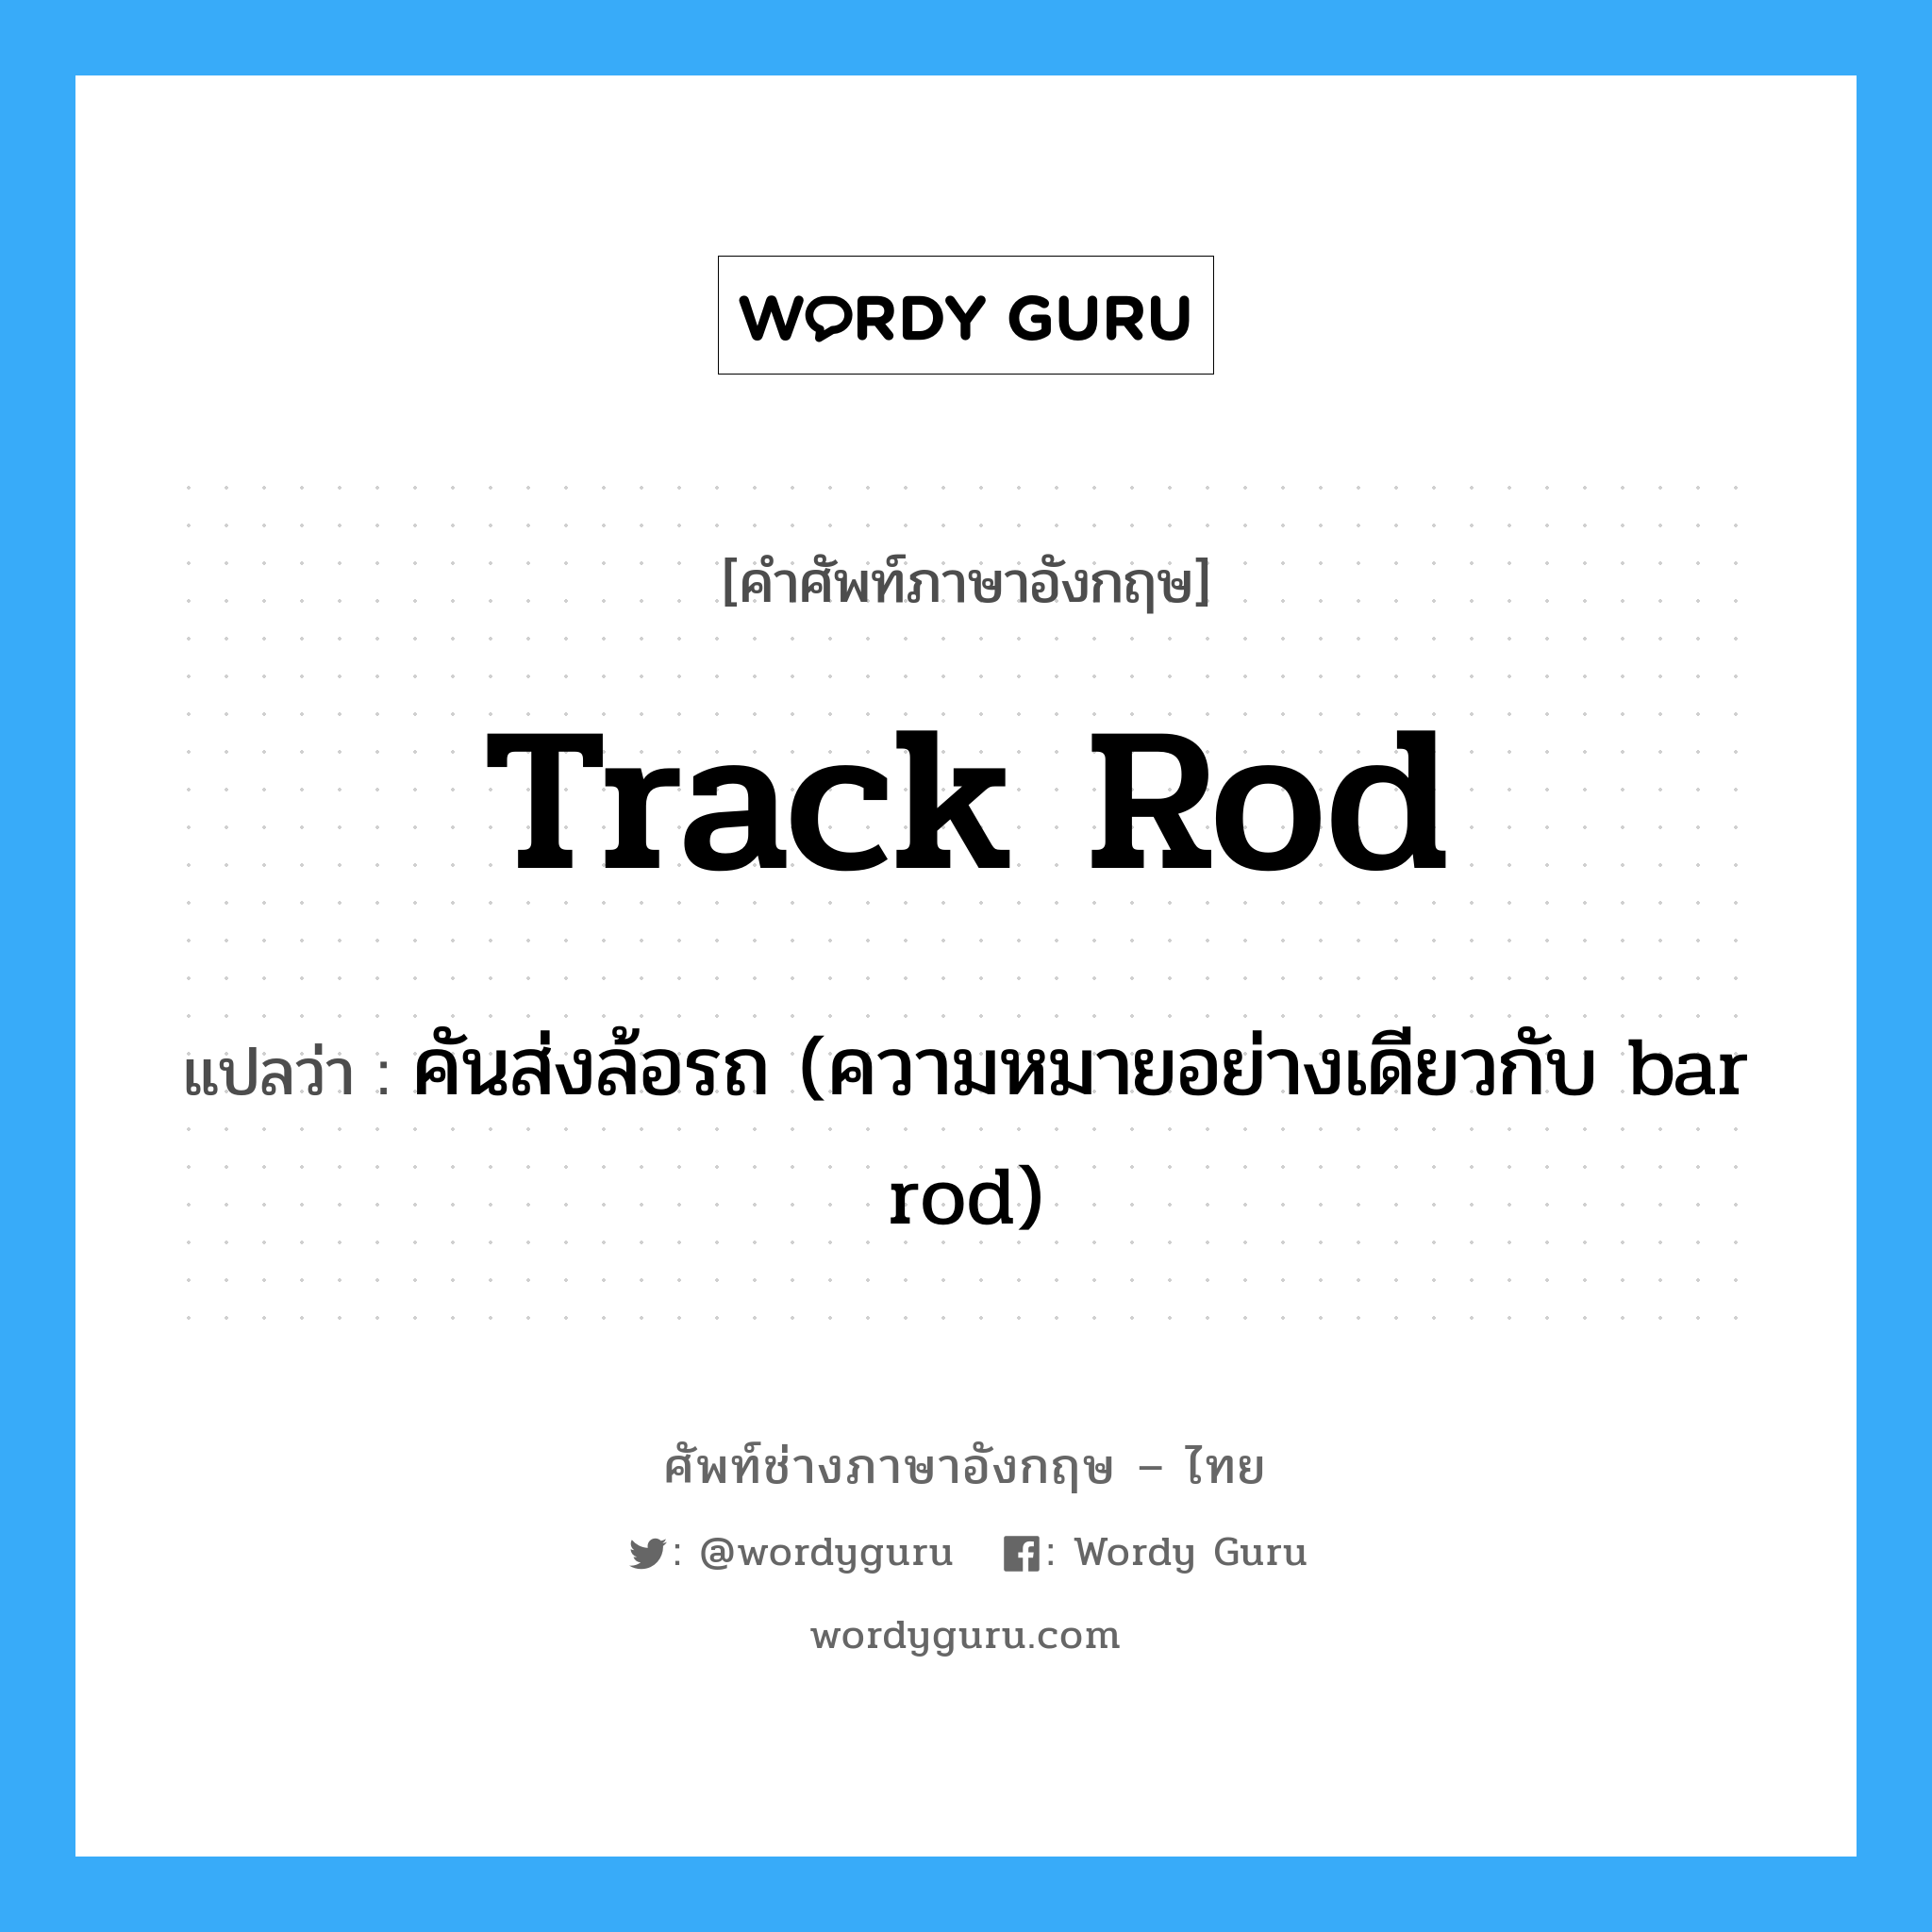 track rod แปลว่า?, คำศัพท์ช่างภาษาอังกฤษ - ไทย track rod คำศัพท์ภาษาอังกฤษ track rod แปลว่า คันส่งล้อรถ (ความหมายอย่างเดียวกับ bar rod)